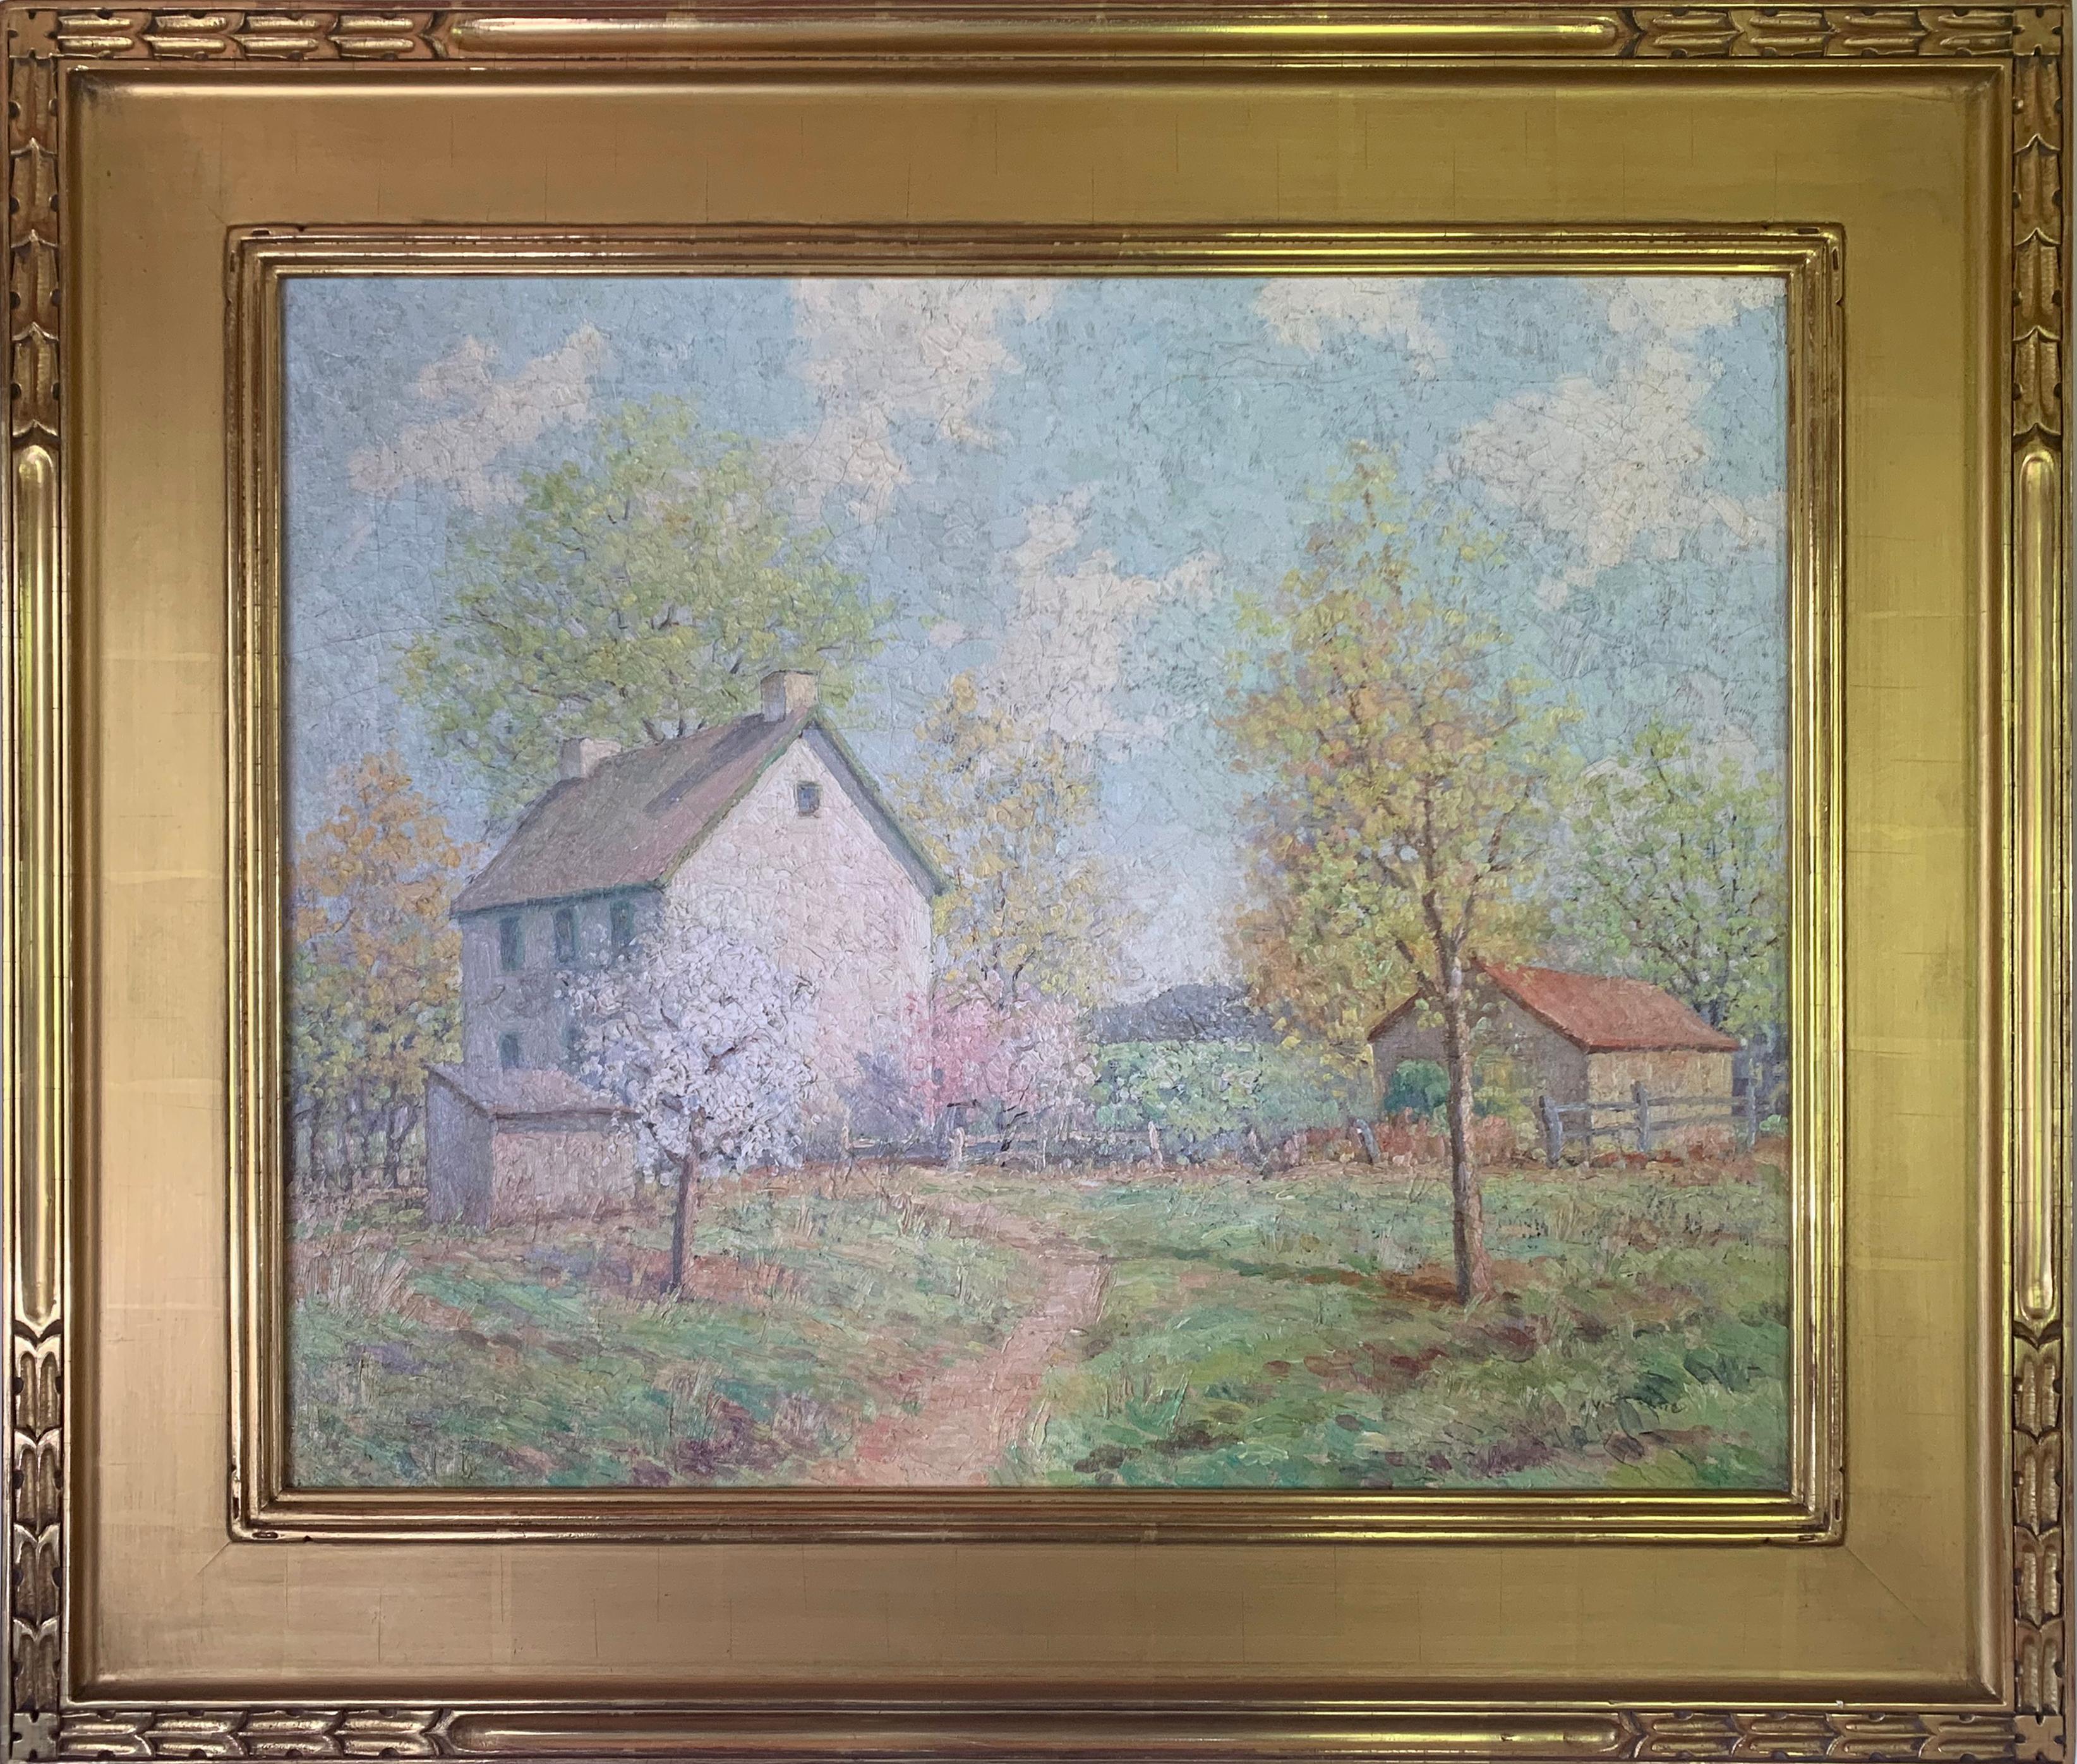 The Joy of Spring, American Impressionist Landscape, Farm Scene, Oil on Canvas